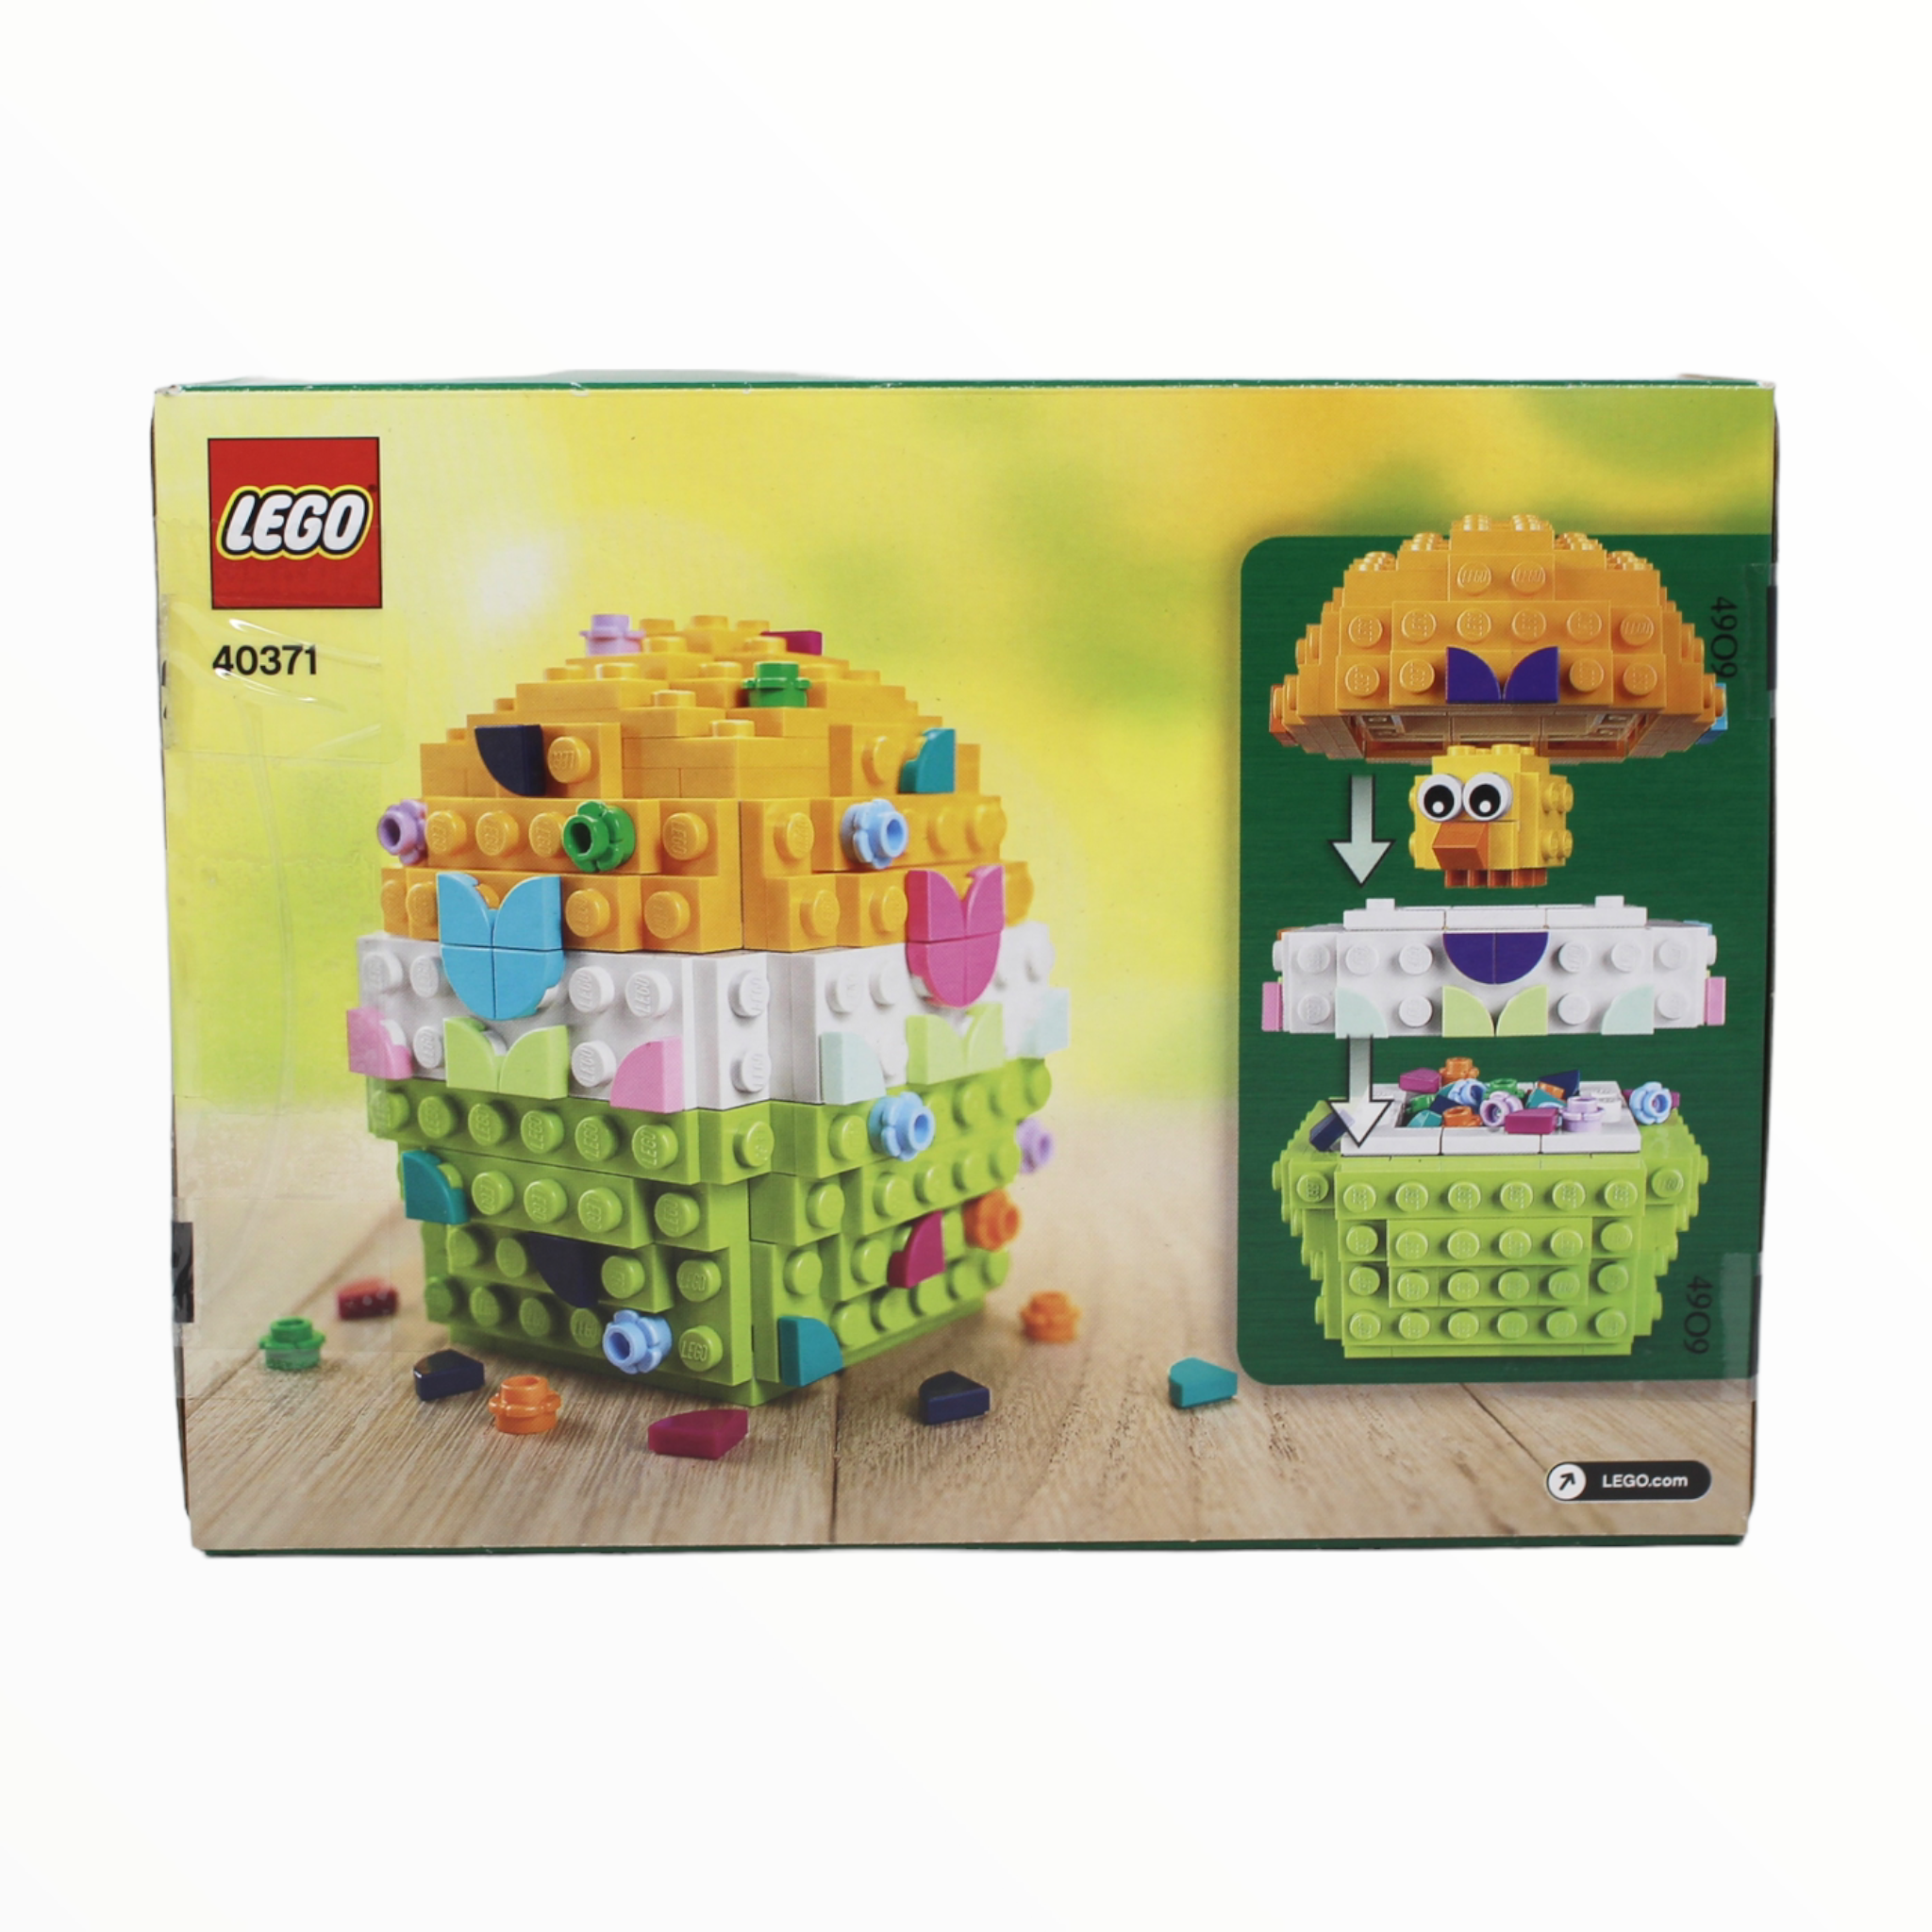 Certified Used Set 40371 LEGO Easter Egg